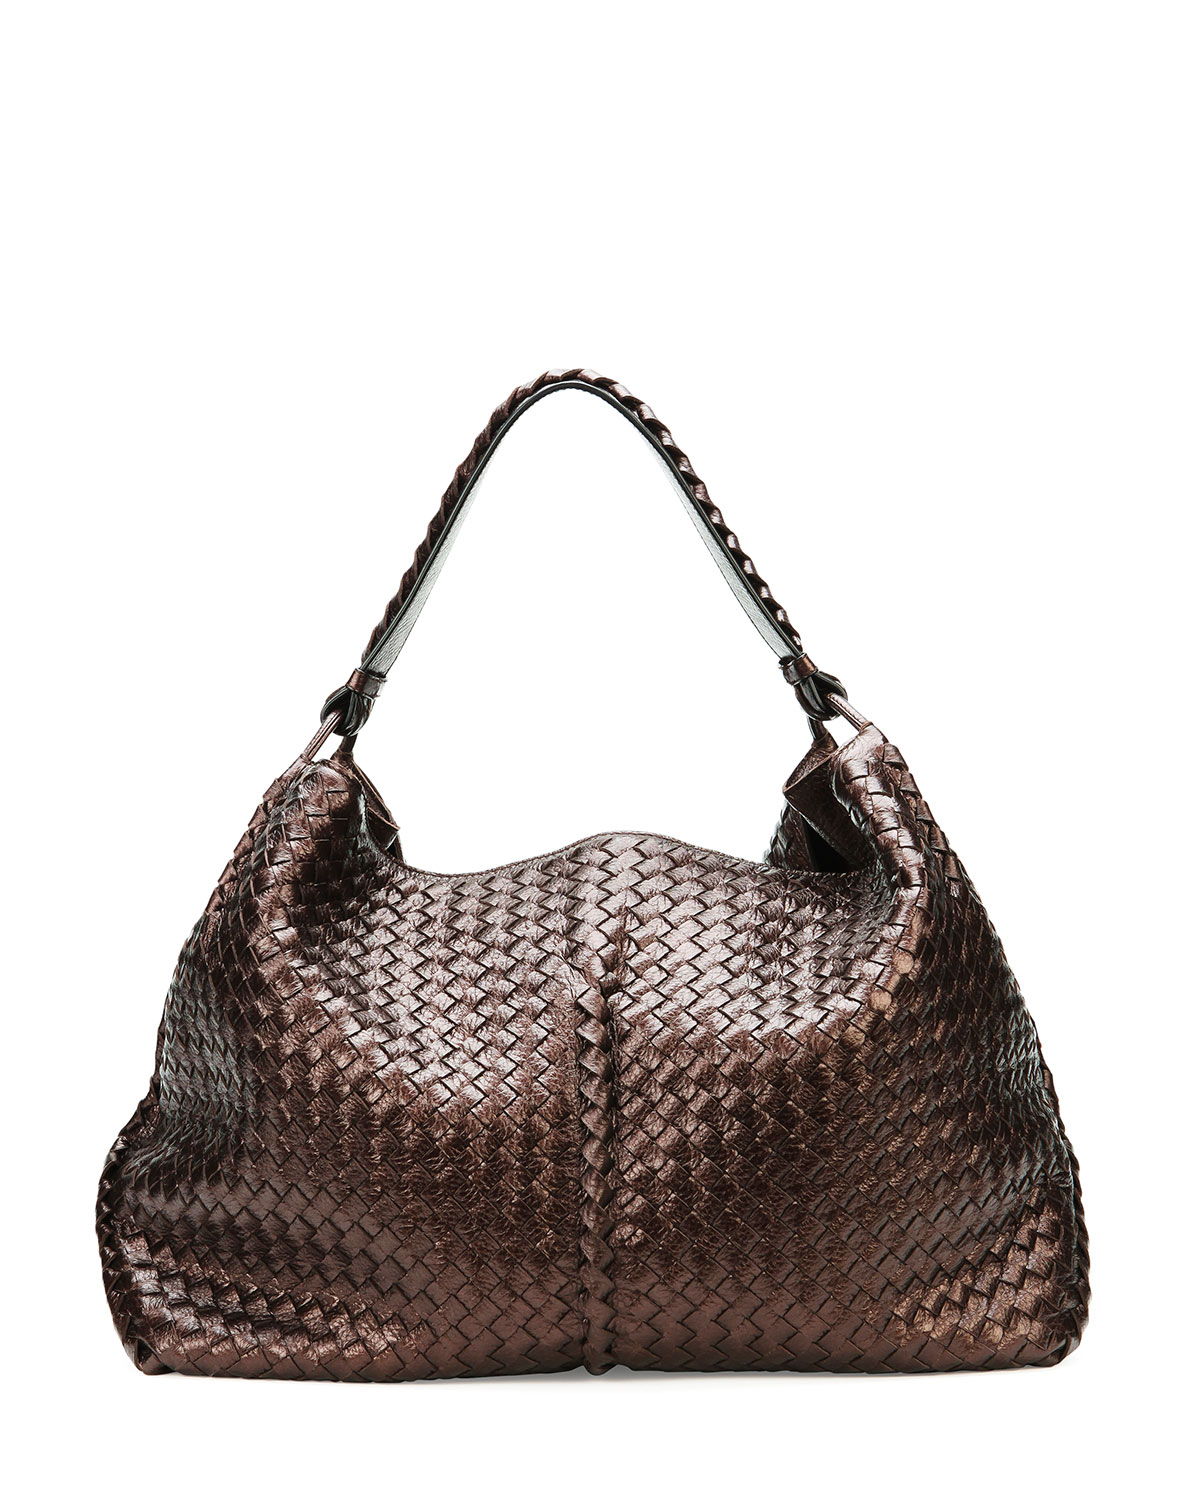 Bottega Veneta Large Metallic Cervo Shoulder Bag in Metallic Brown (Brown) - Lyst